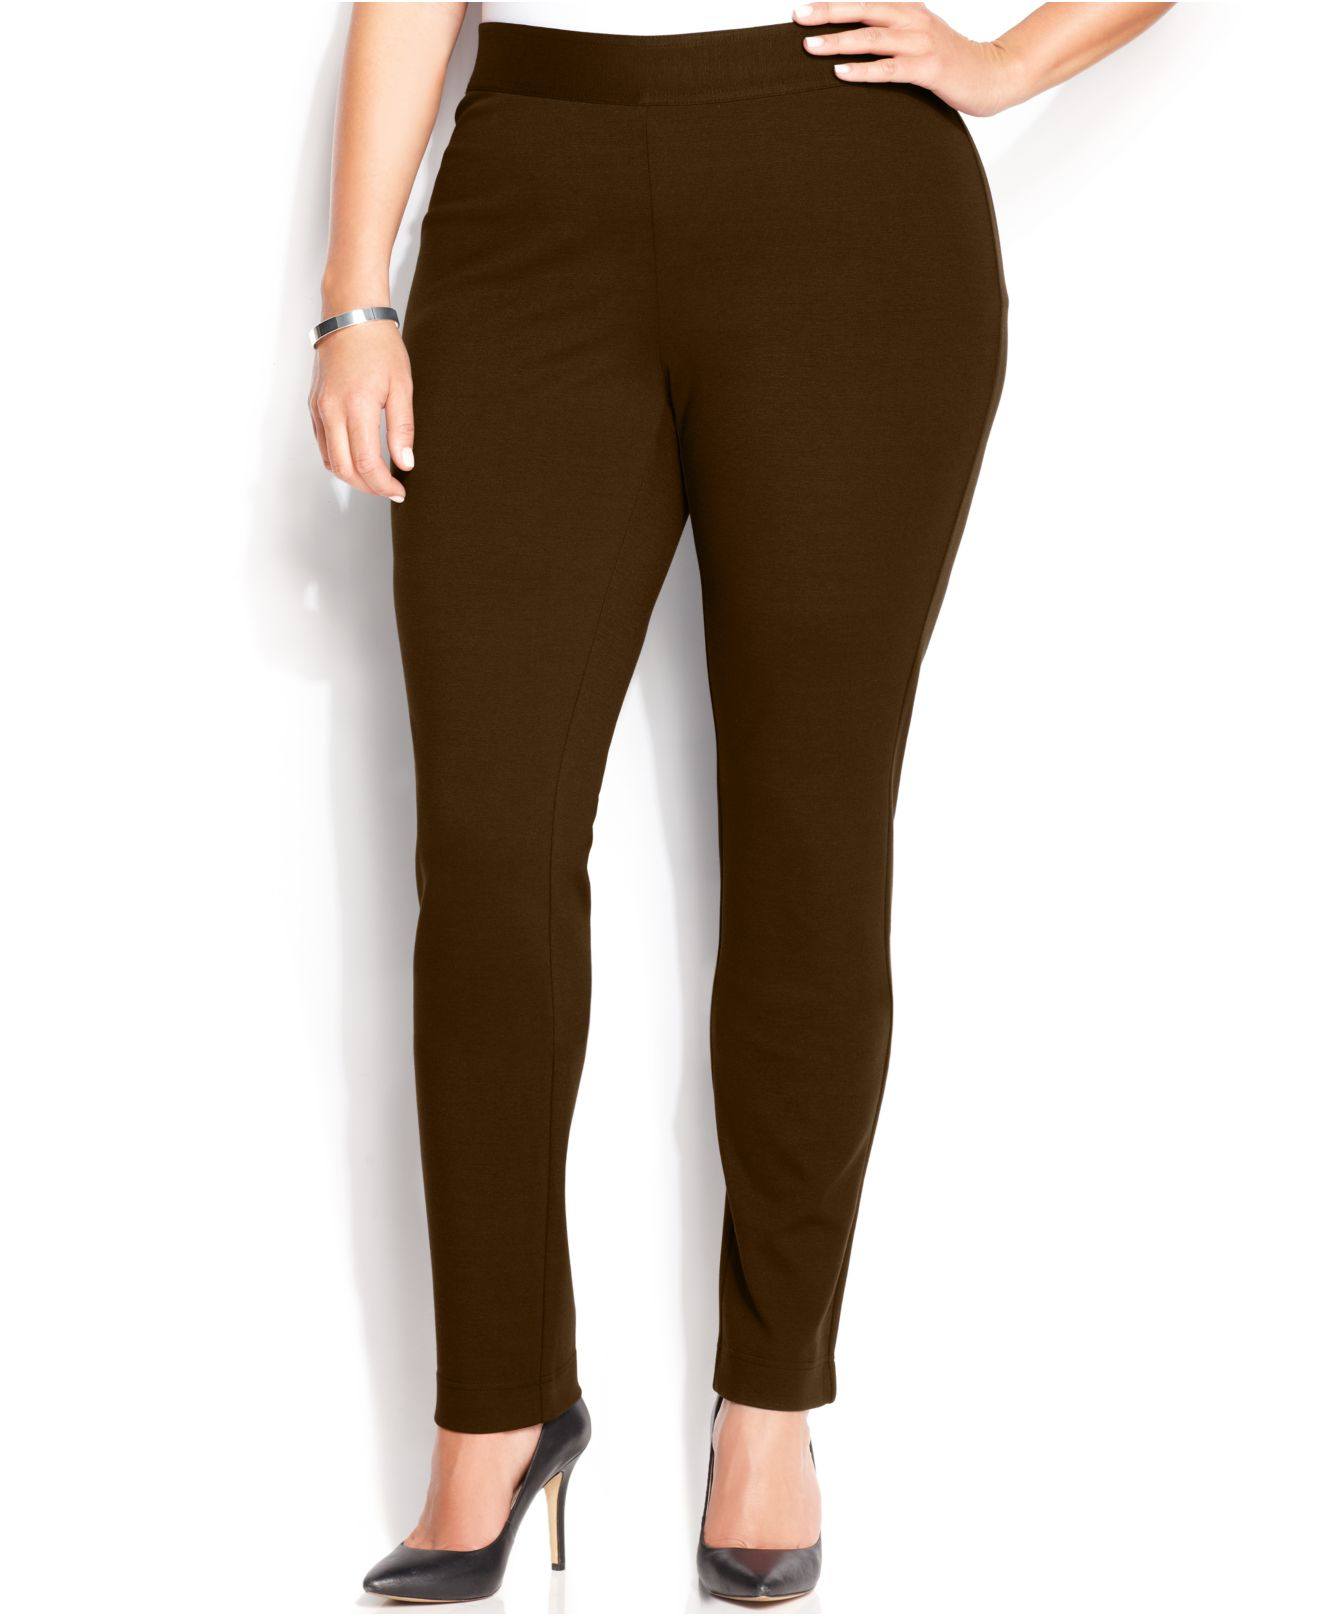 https://cdna.lystit.com/photos/b8f8-2014/12/02/inc-international-concepts-brown-plus-size-pull-on-skinny-ponte-pants-product-1-22919498-0-893747605-normal.jpeg